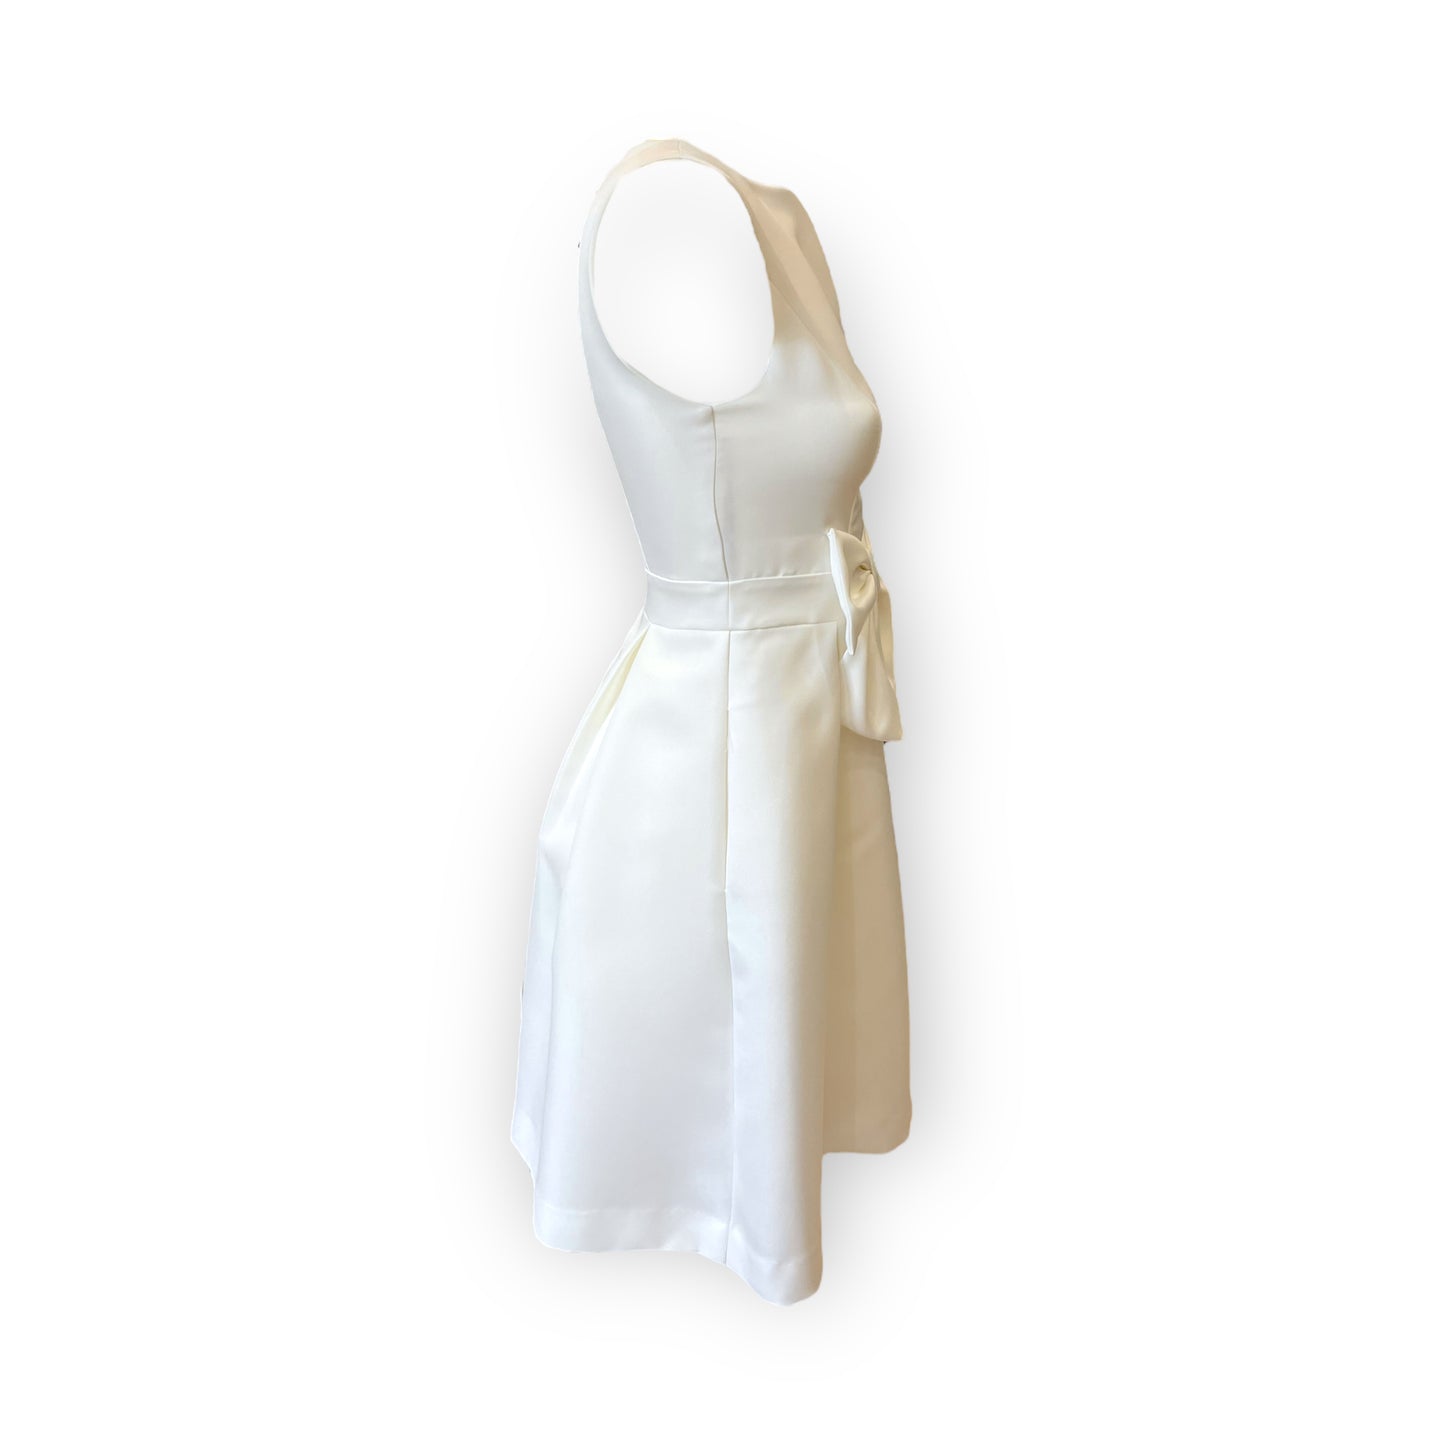 NEW Apart Glamour White Dress